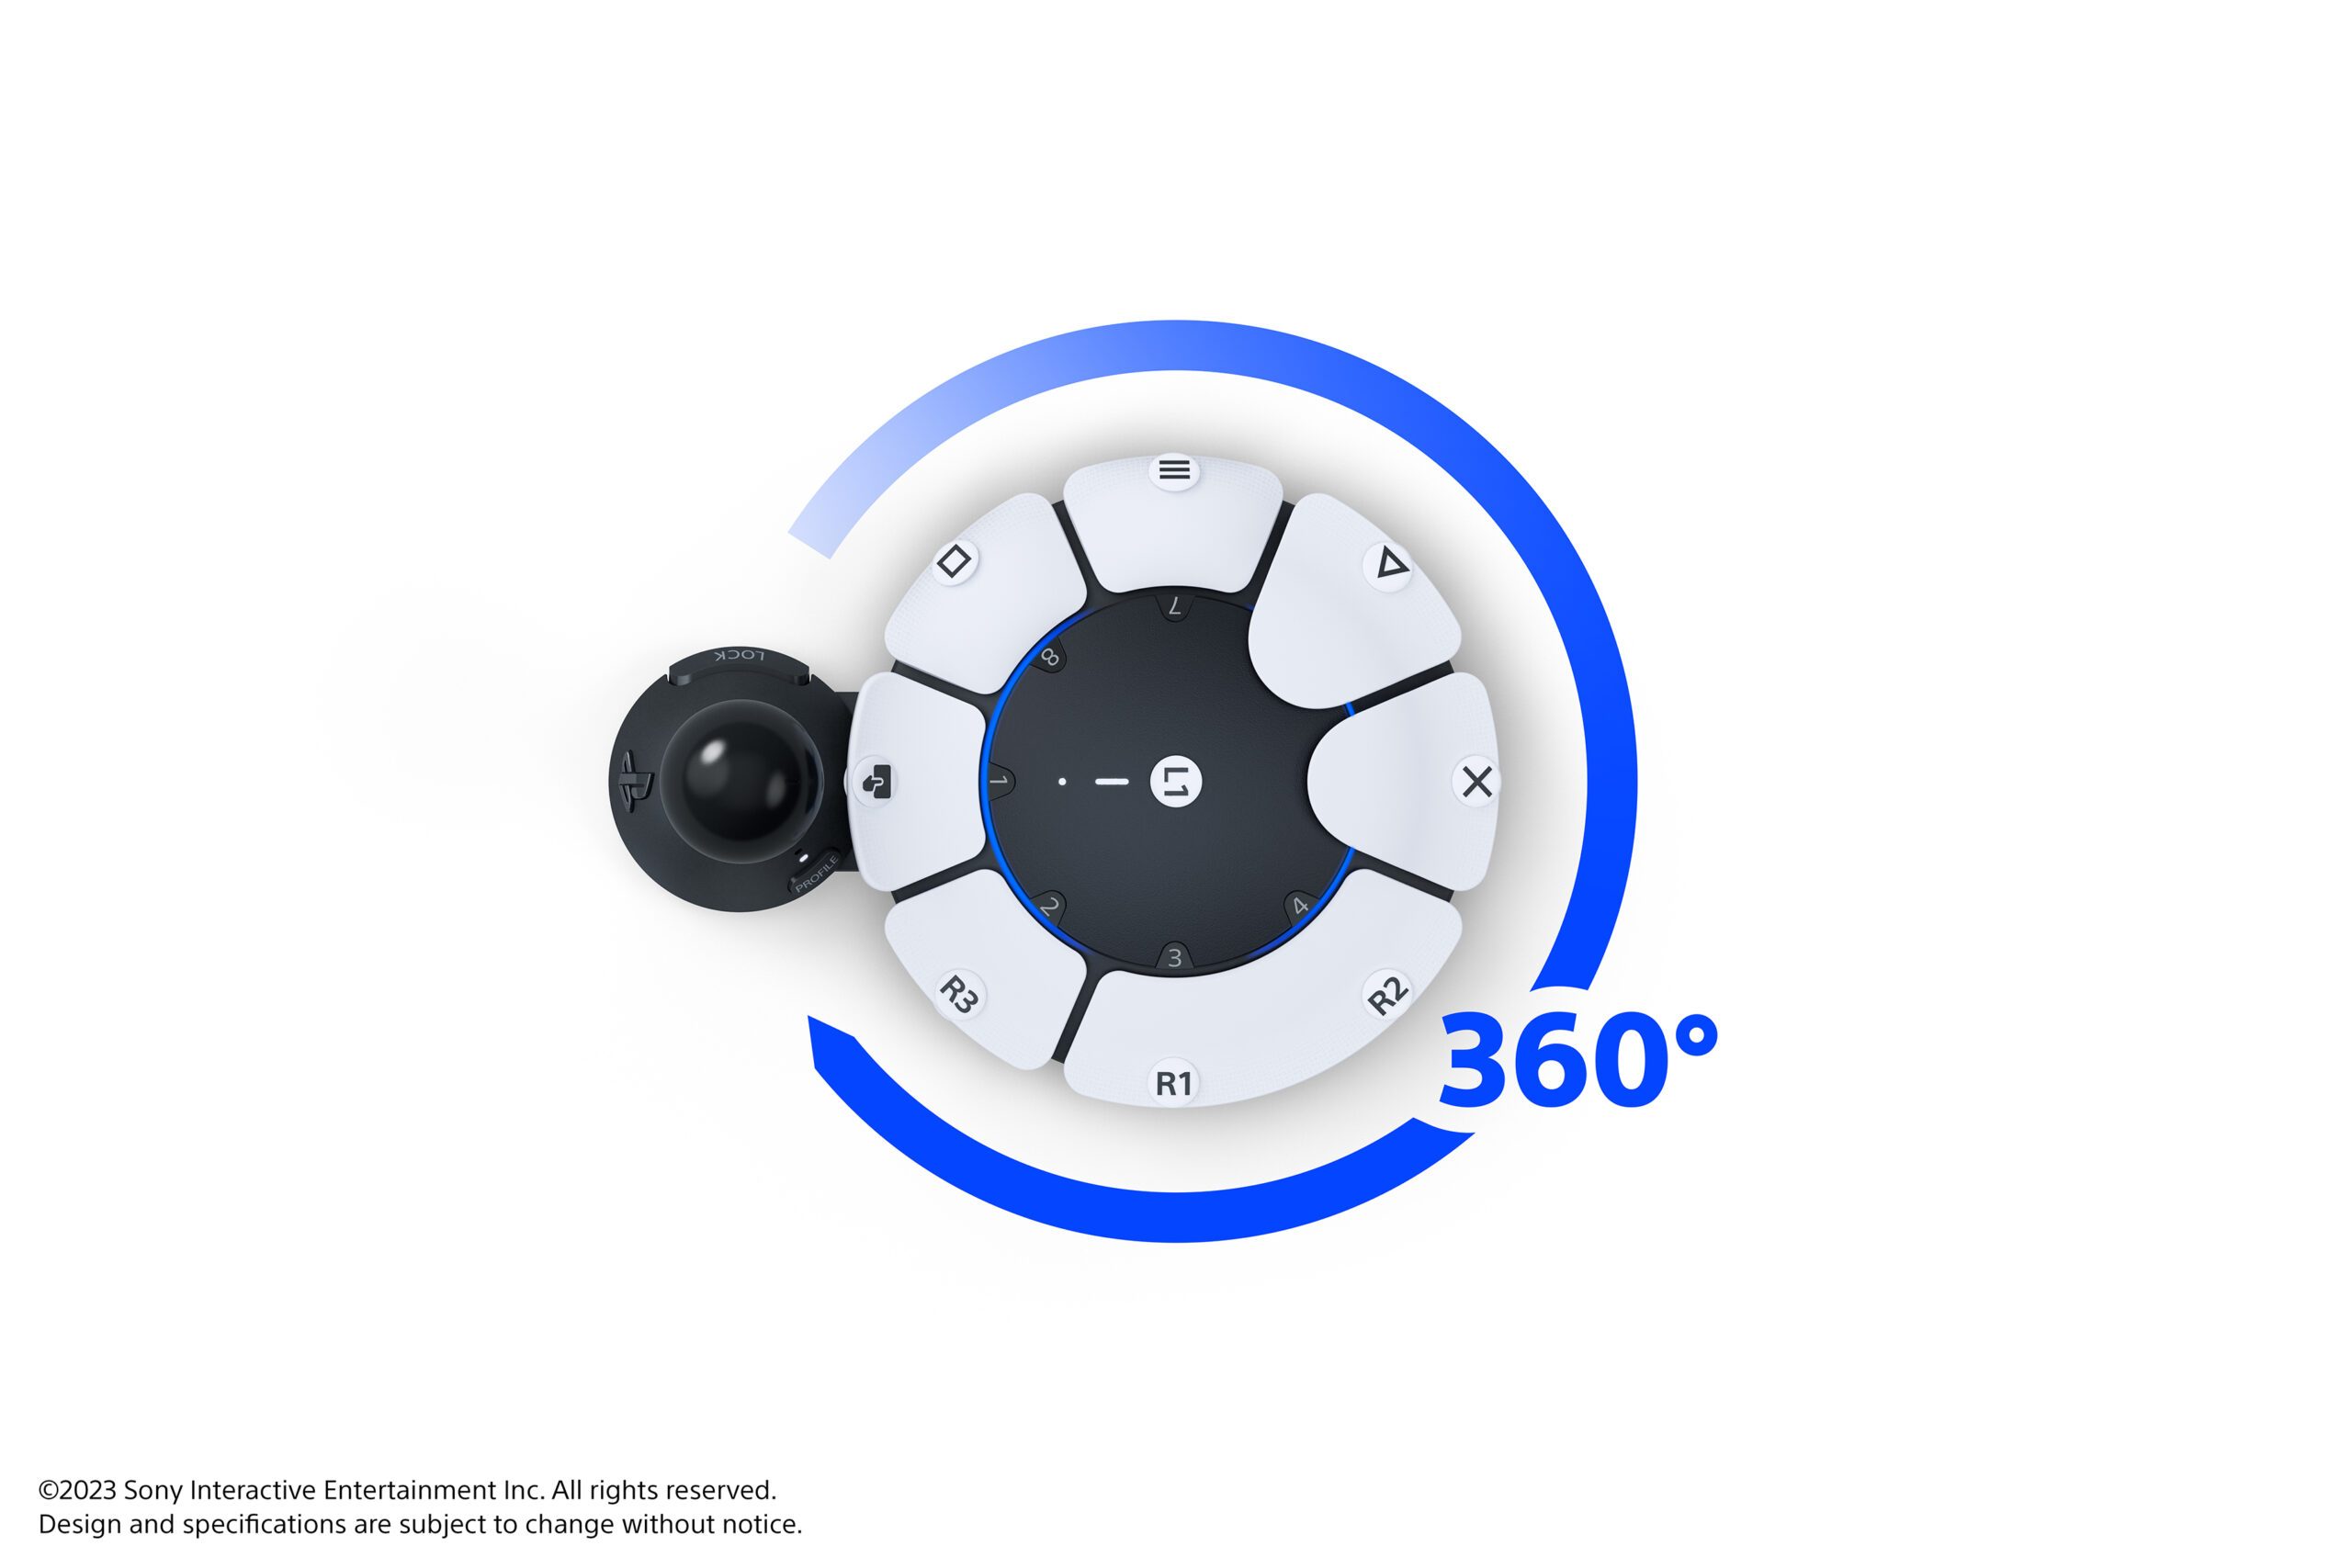 Abbildung zeigt 360-Grad-Ausrichtungsoptionen für den Access Controller